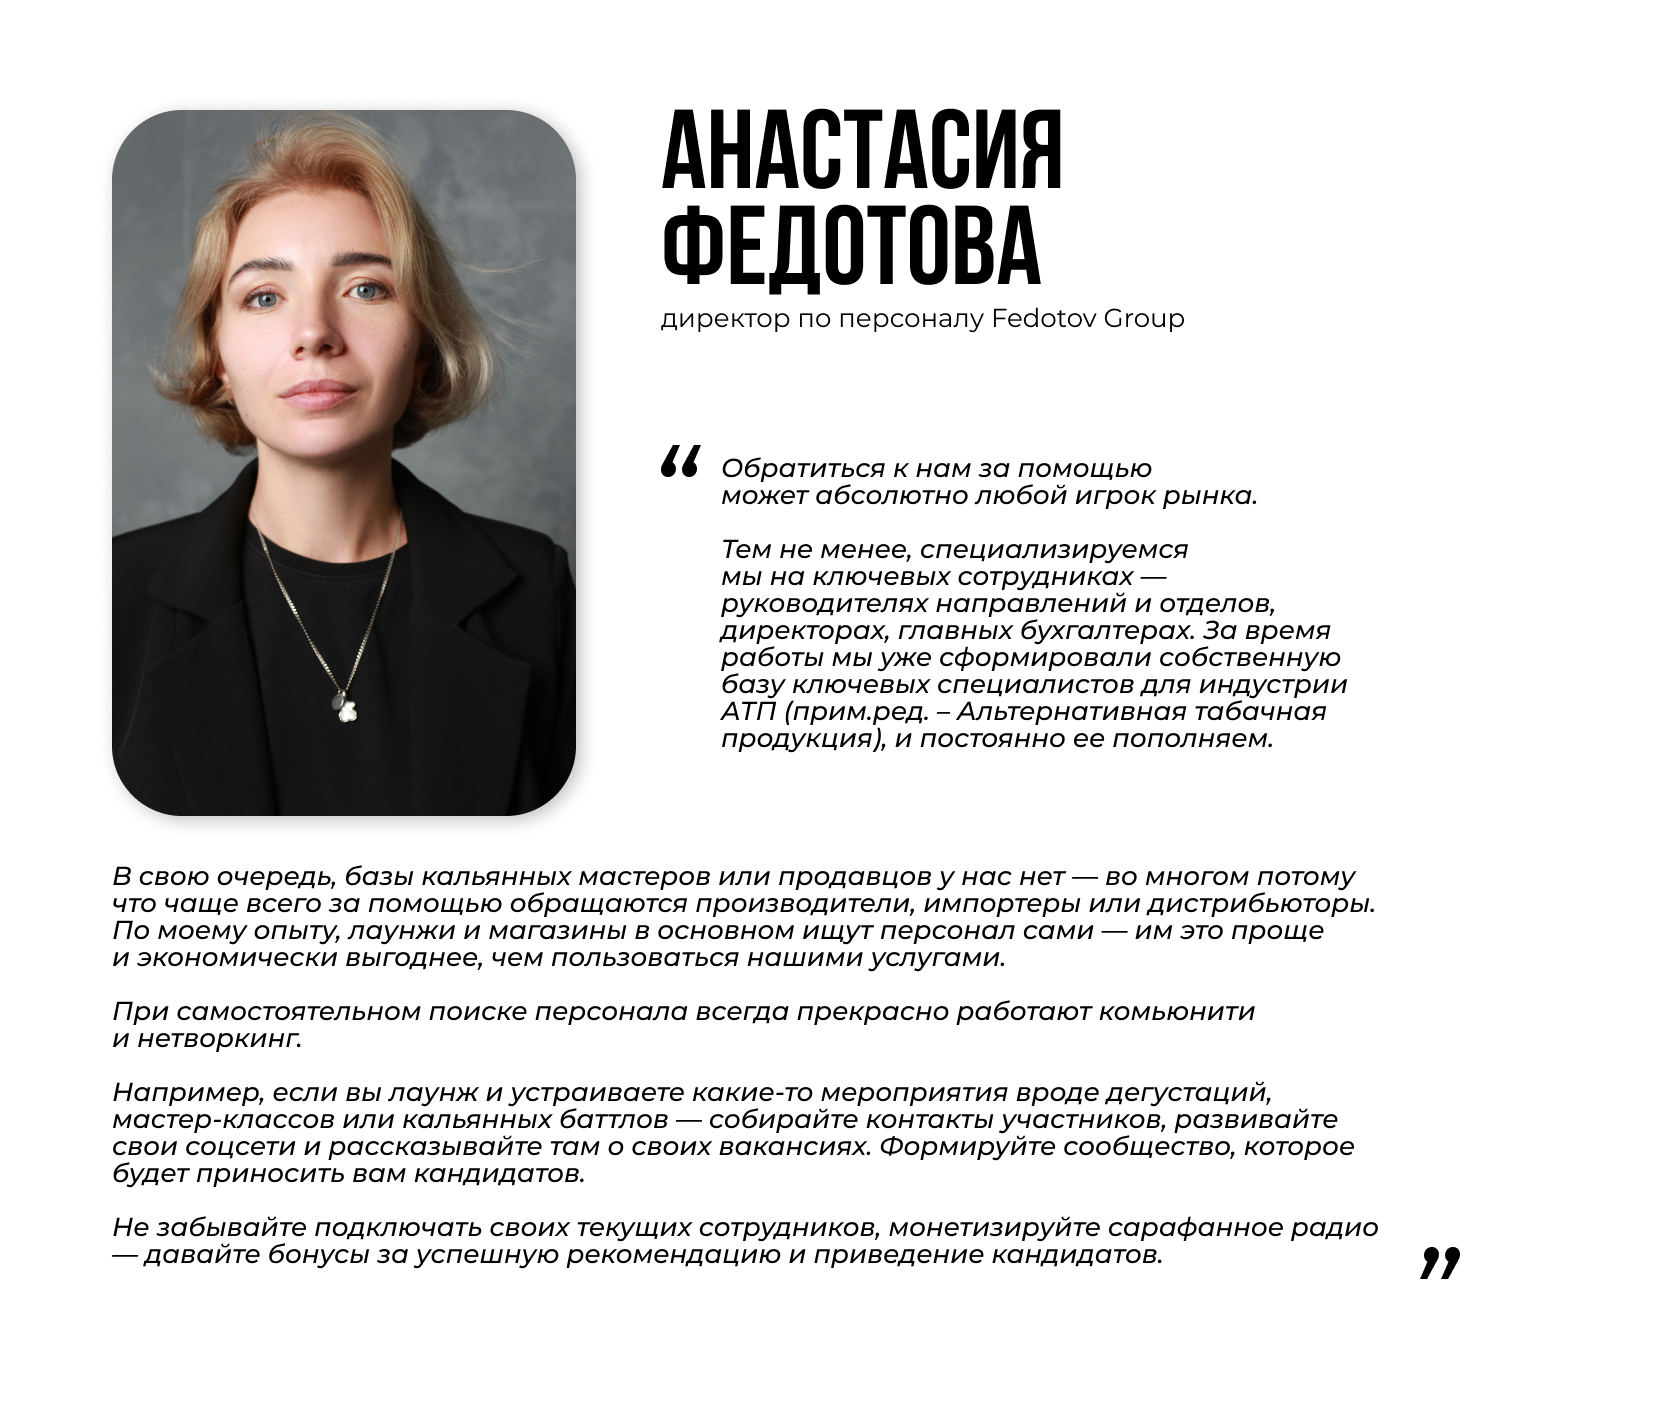 Анастасия Федотова, директор по персоналу Fedotov Group